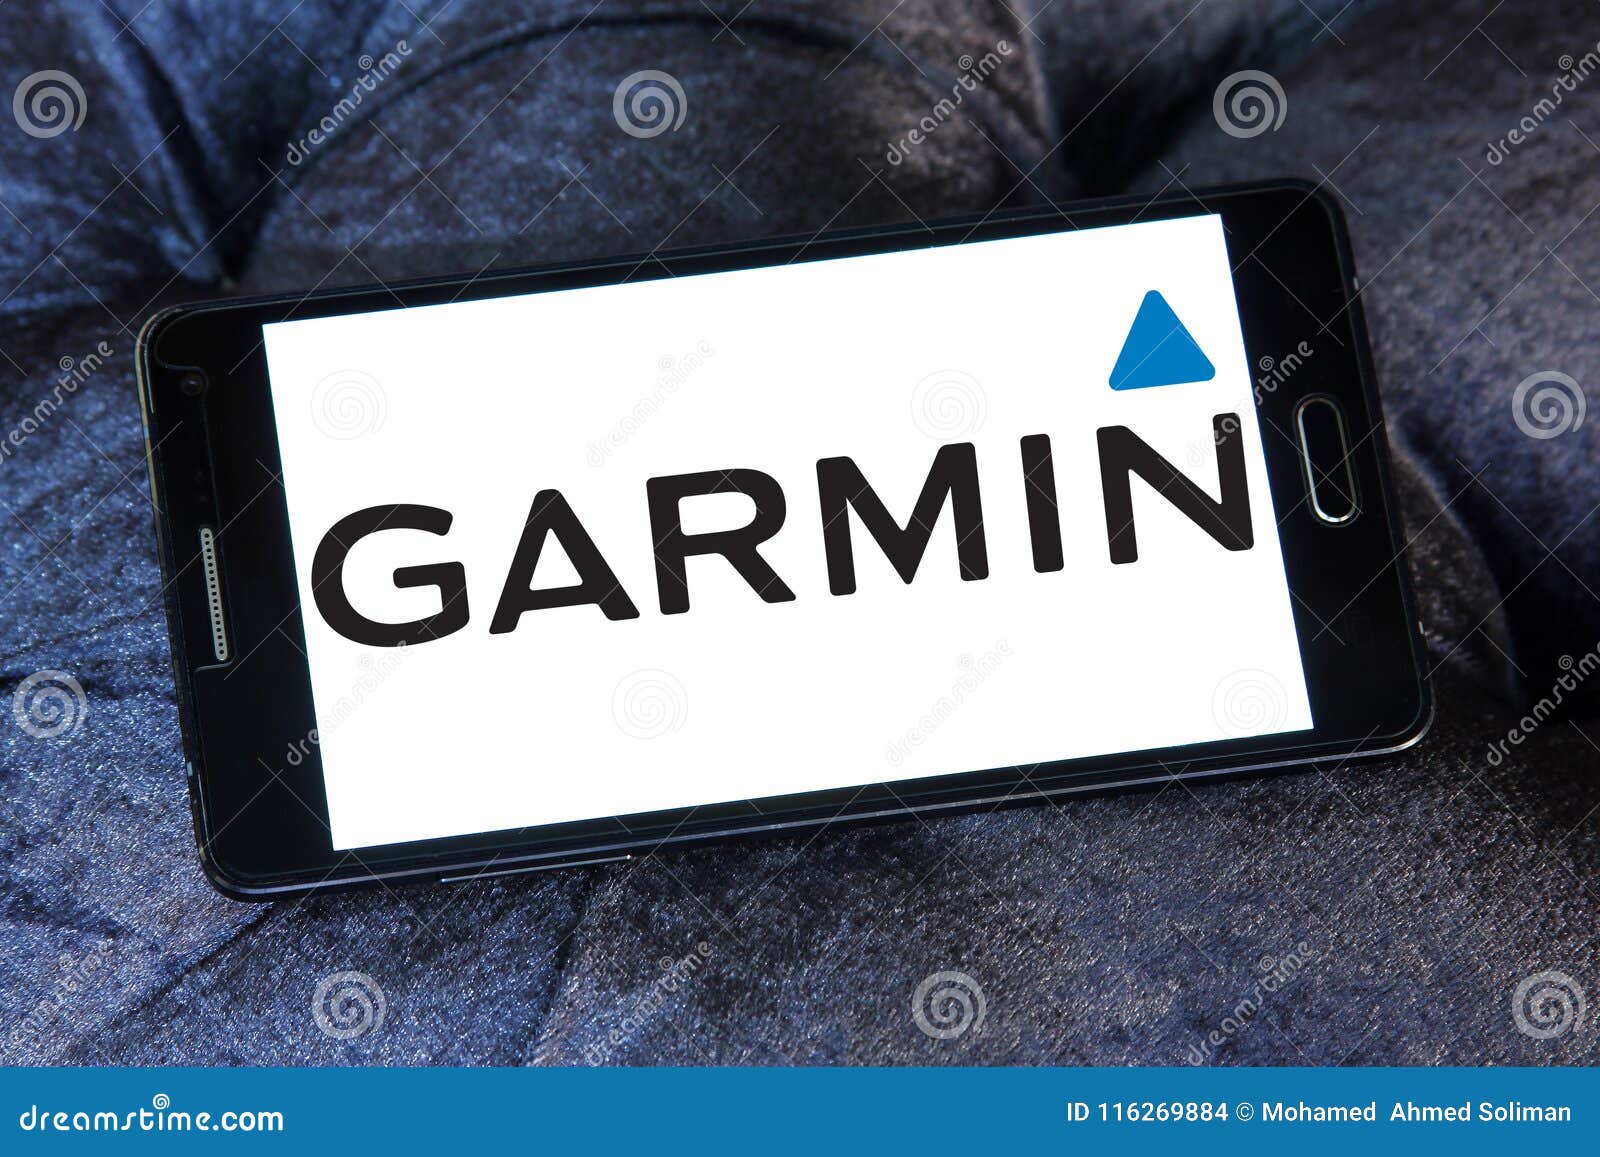 New Garmin EPIX, Garmin FENIX 7 series officially unveiled - Android  Community